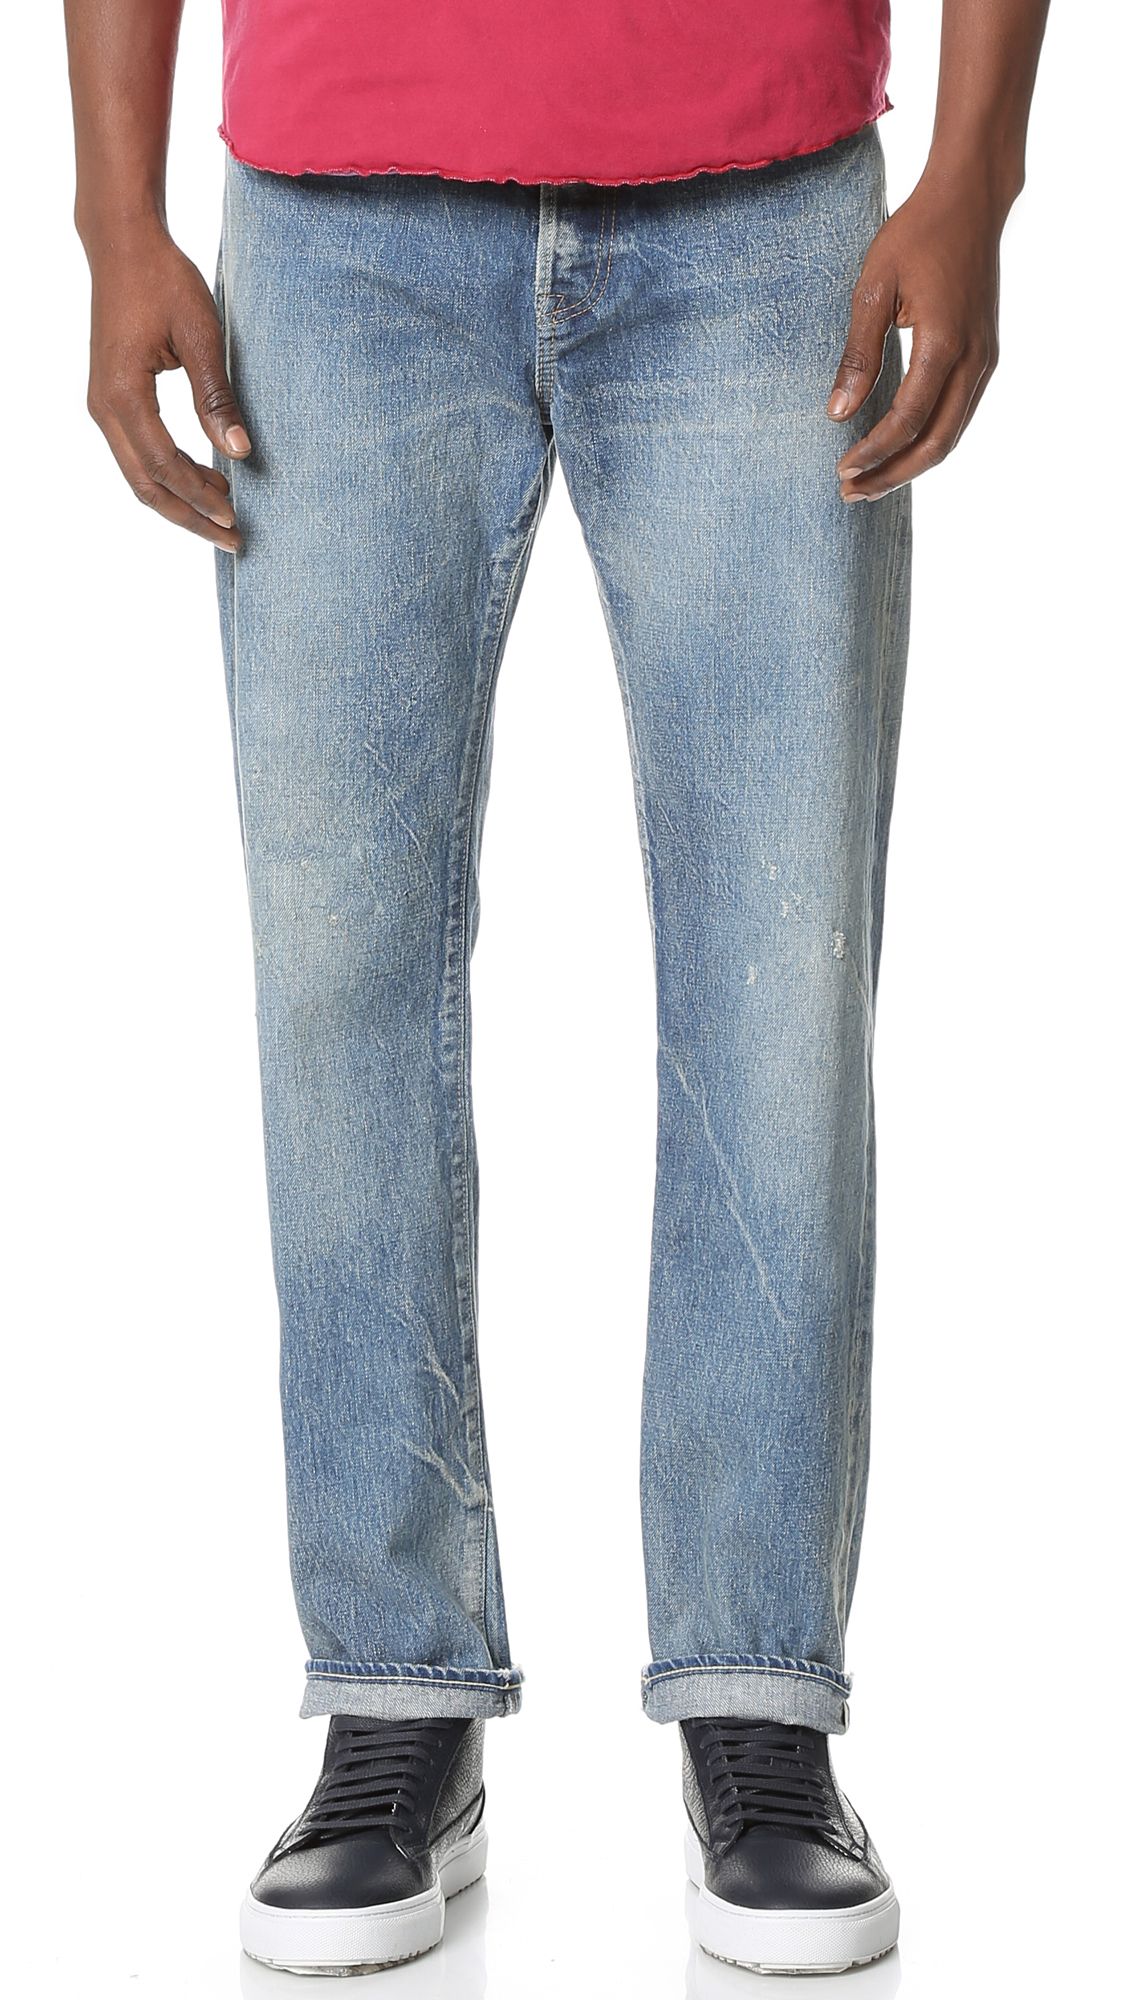 Chimala Selvedge Denim Baggy Straight Cut Jeans in Blue for Men - Lyst